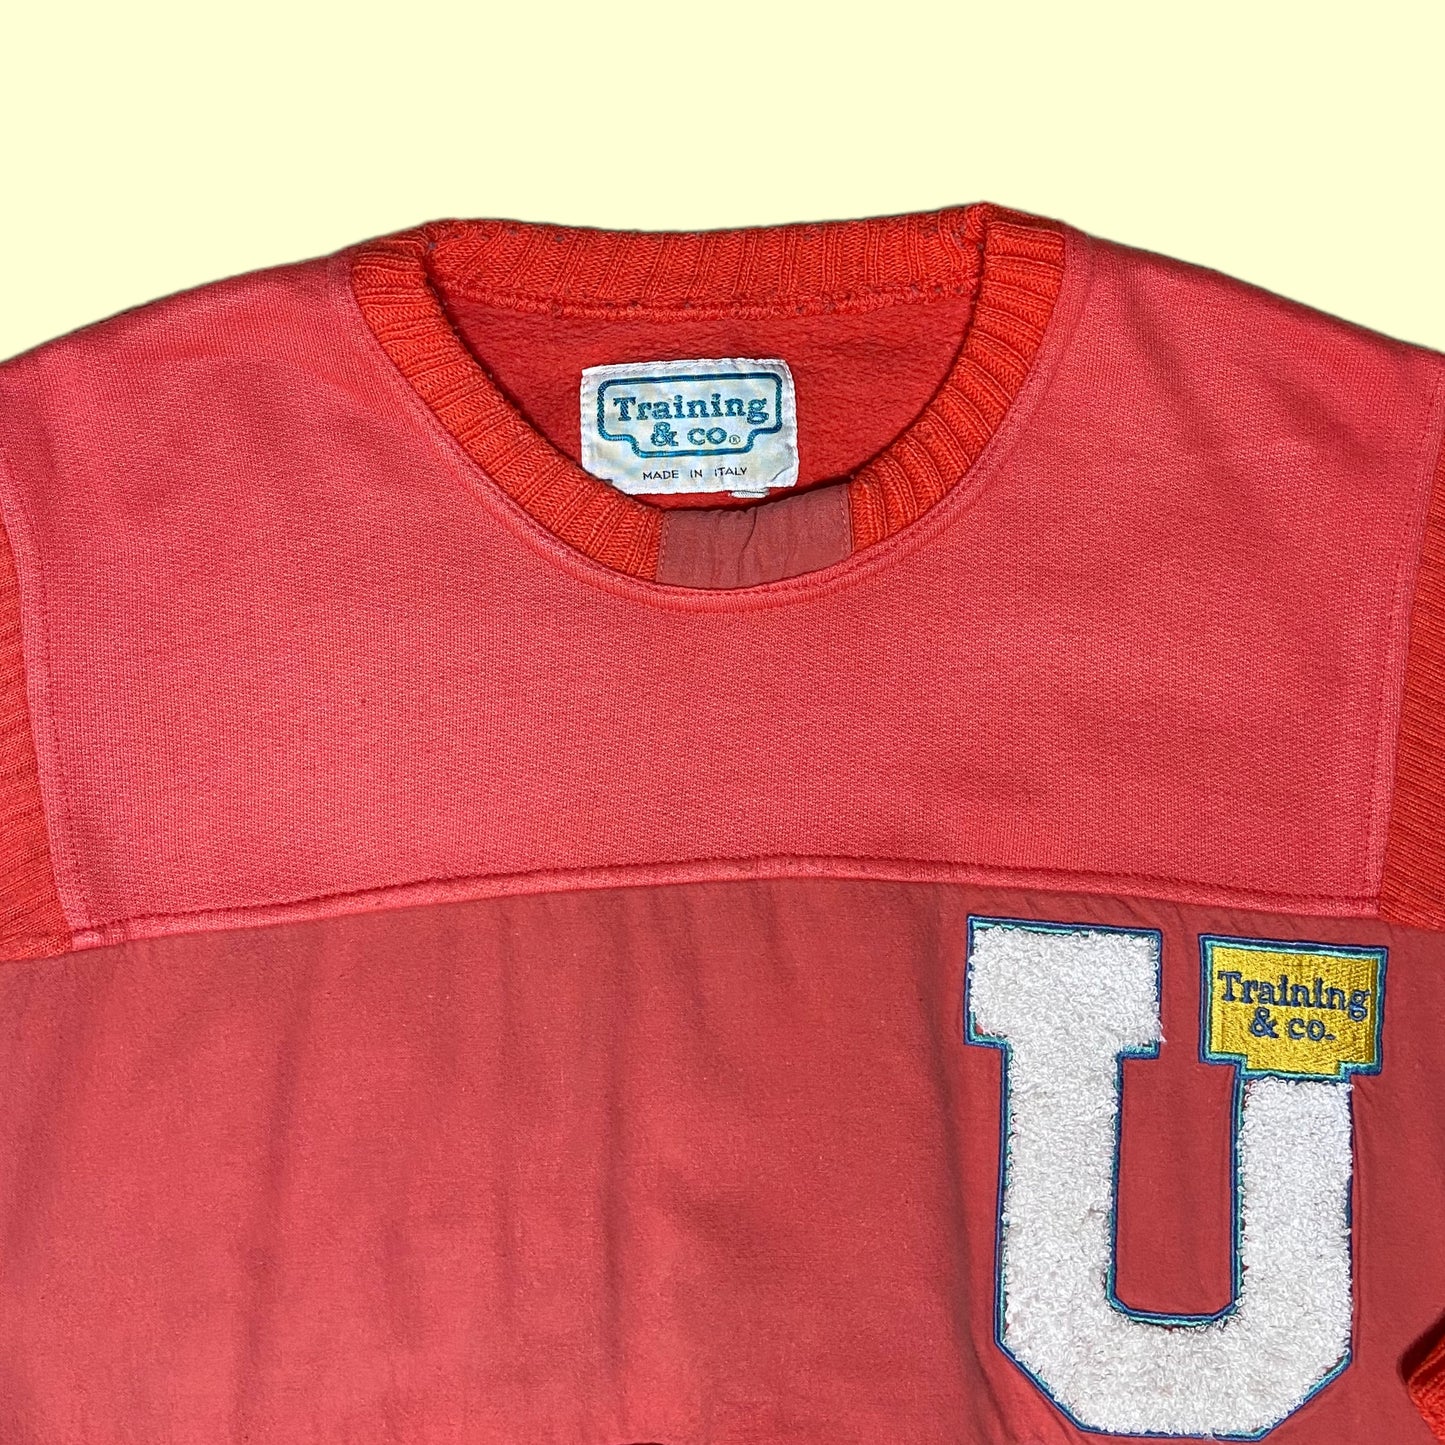 Vintage University sweater - M